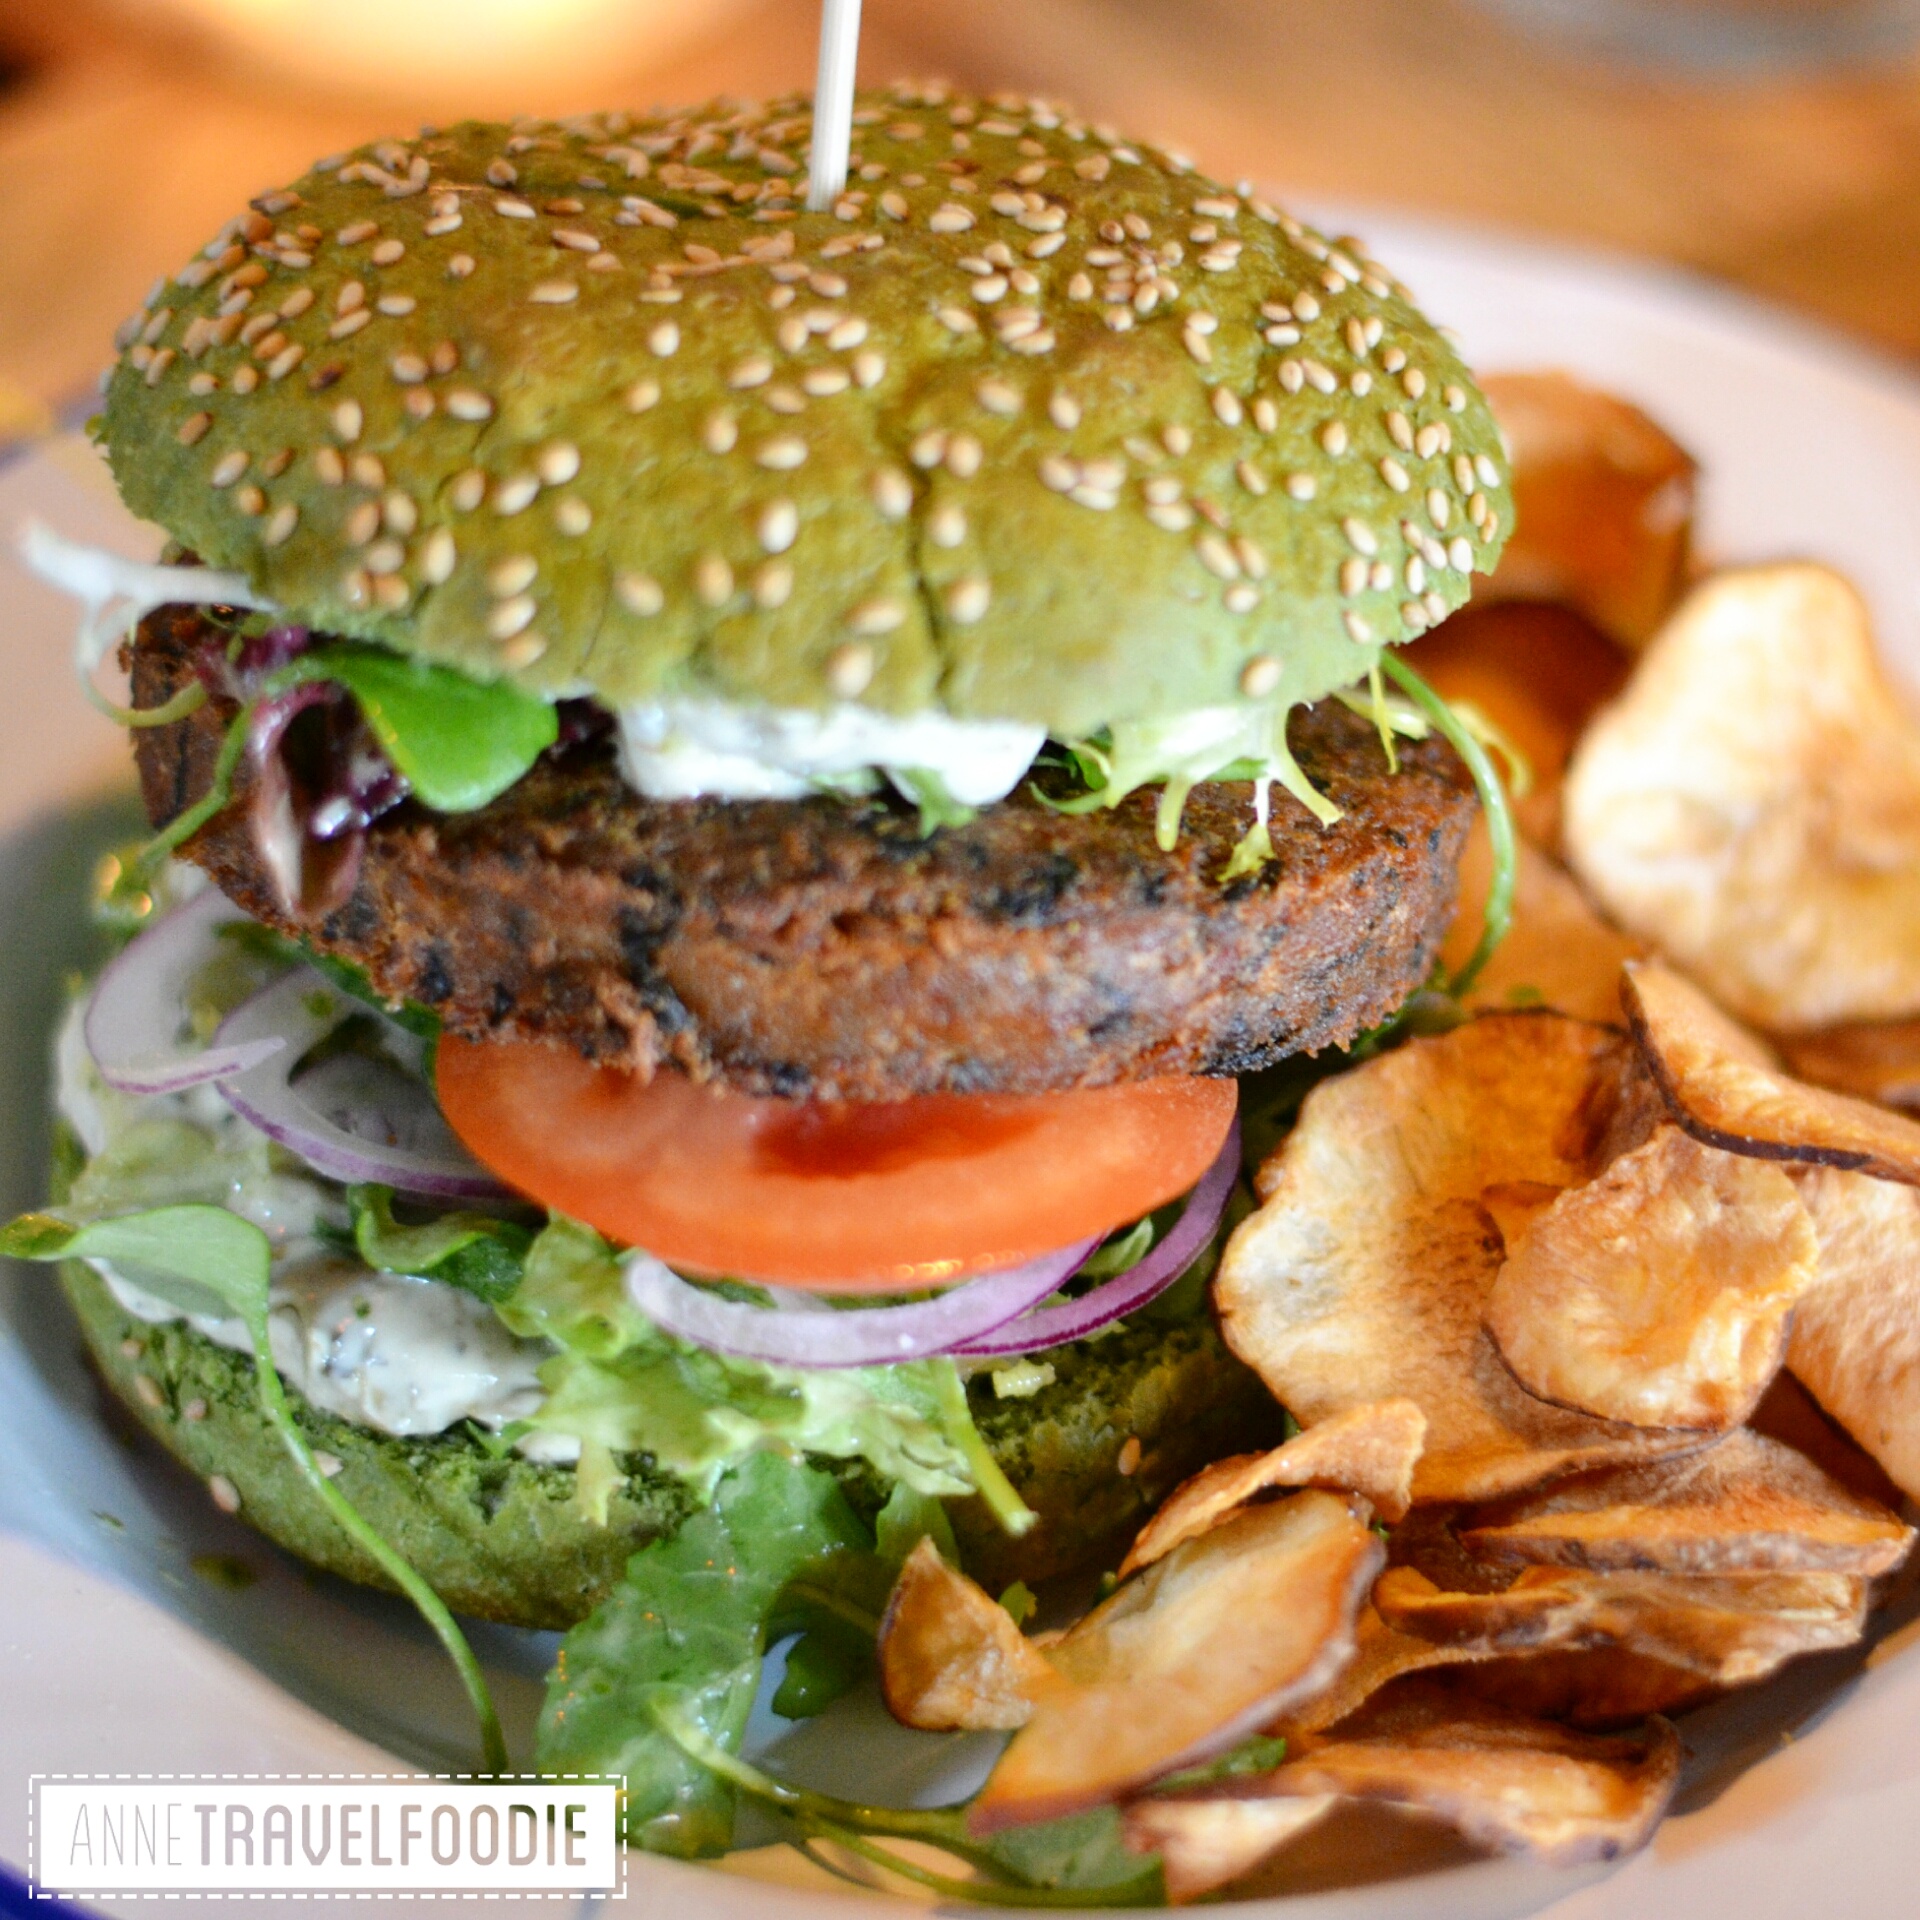 Best Veggie Burger of Amsterdam - Anne Travel Foodie